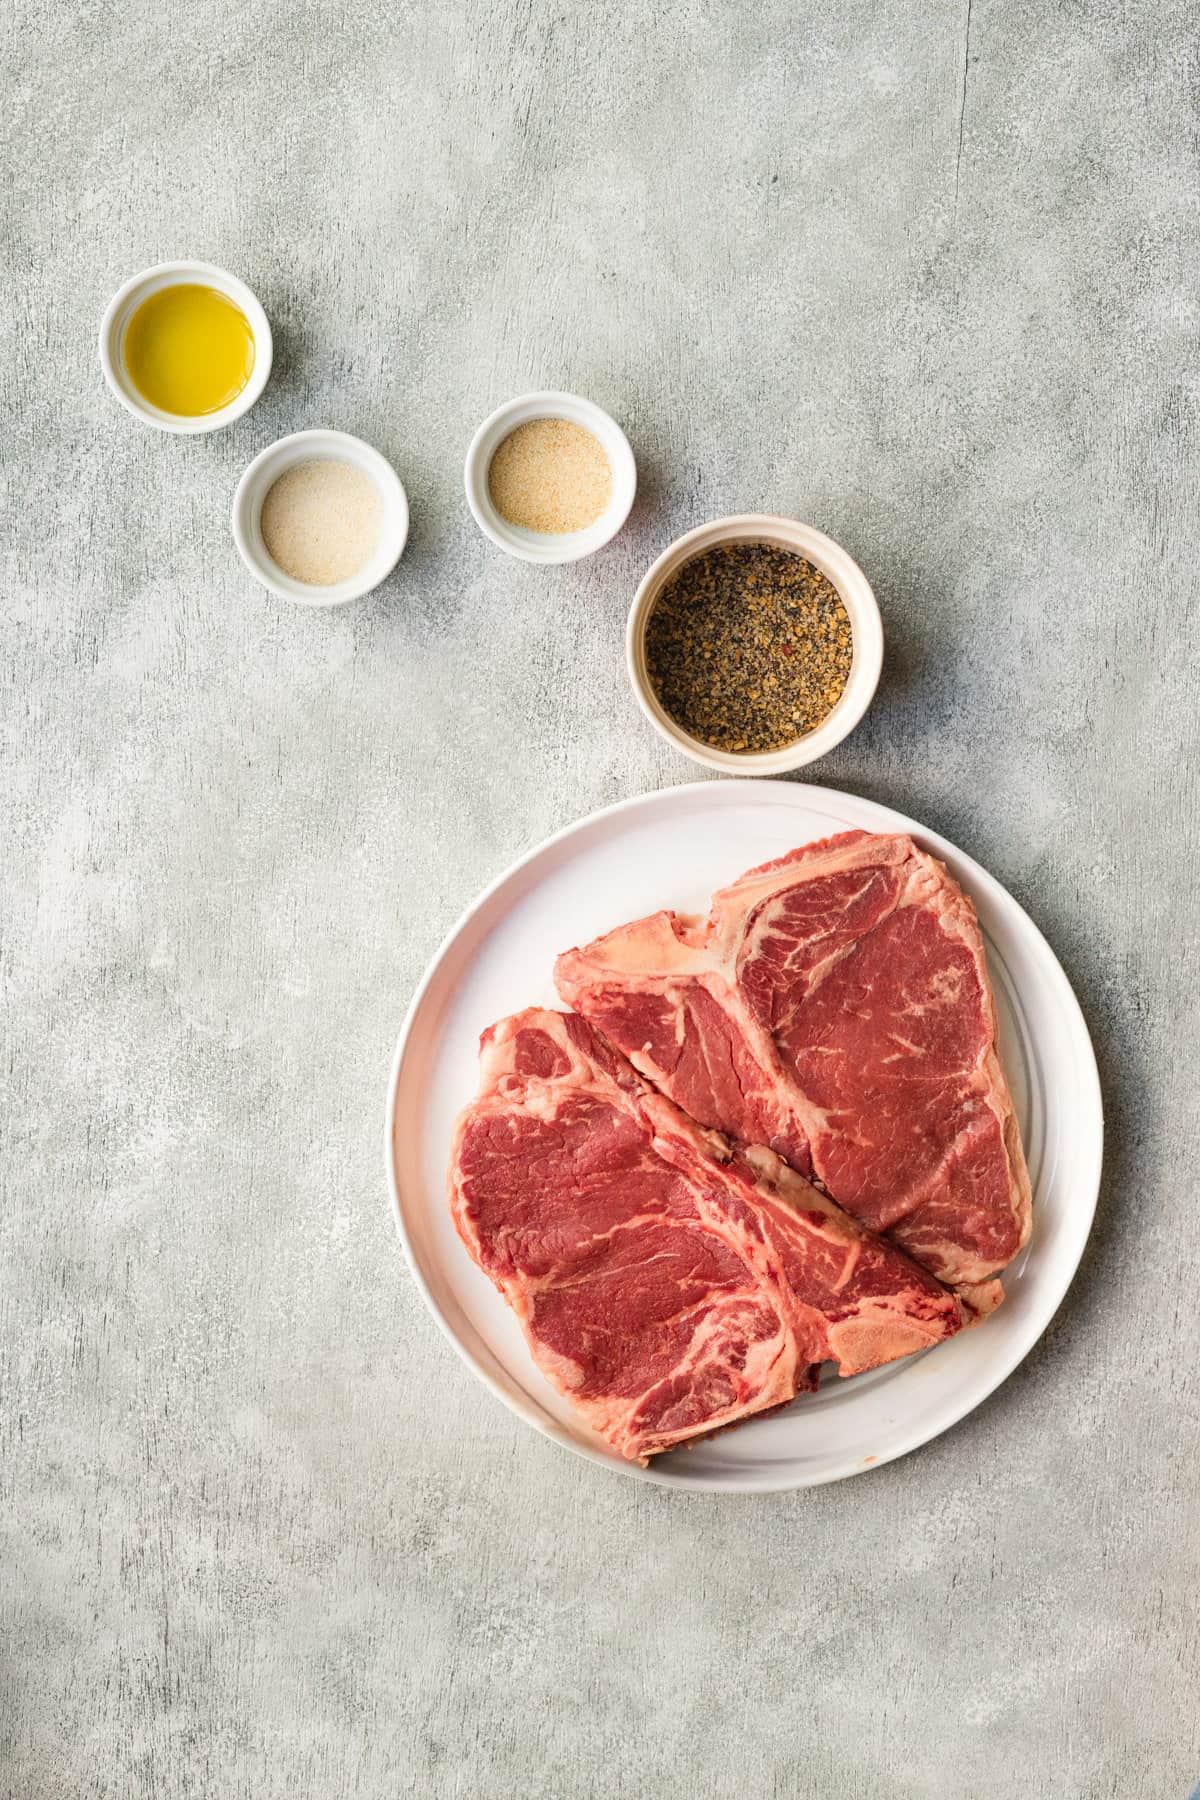 Ingredients to make t-bone steak.